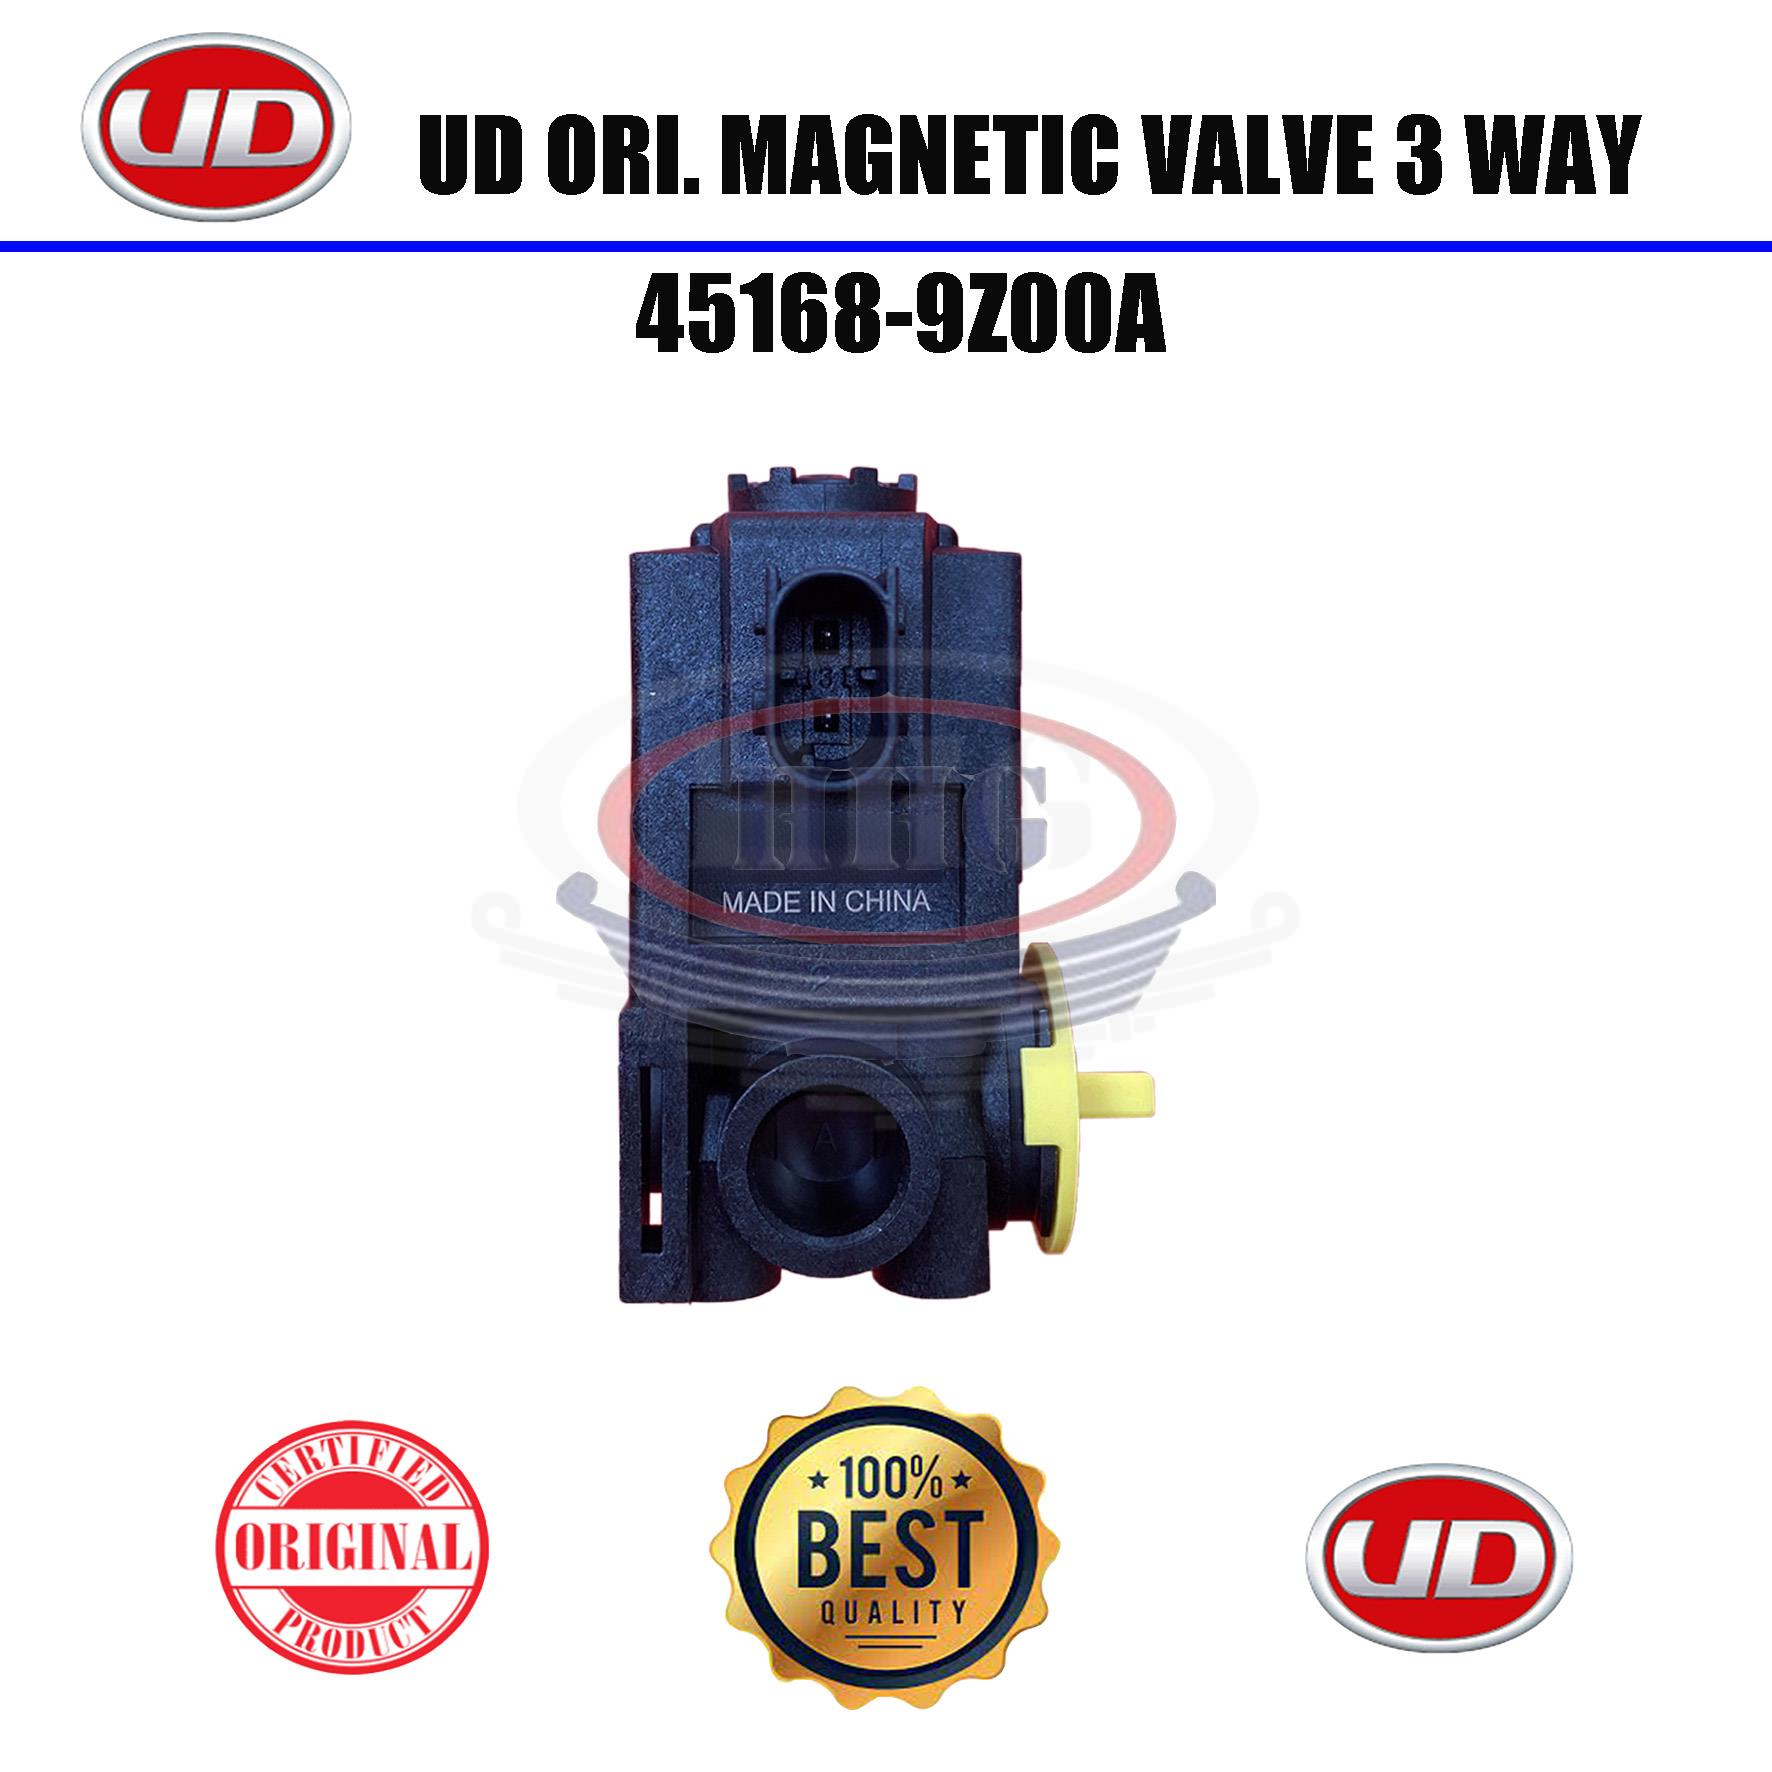 UD Original Quester 3 Way Magnetic Valve (45168-9Z00A)